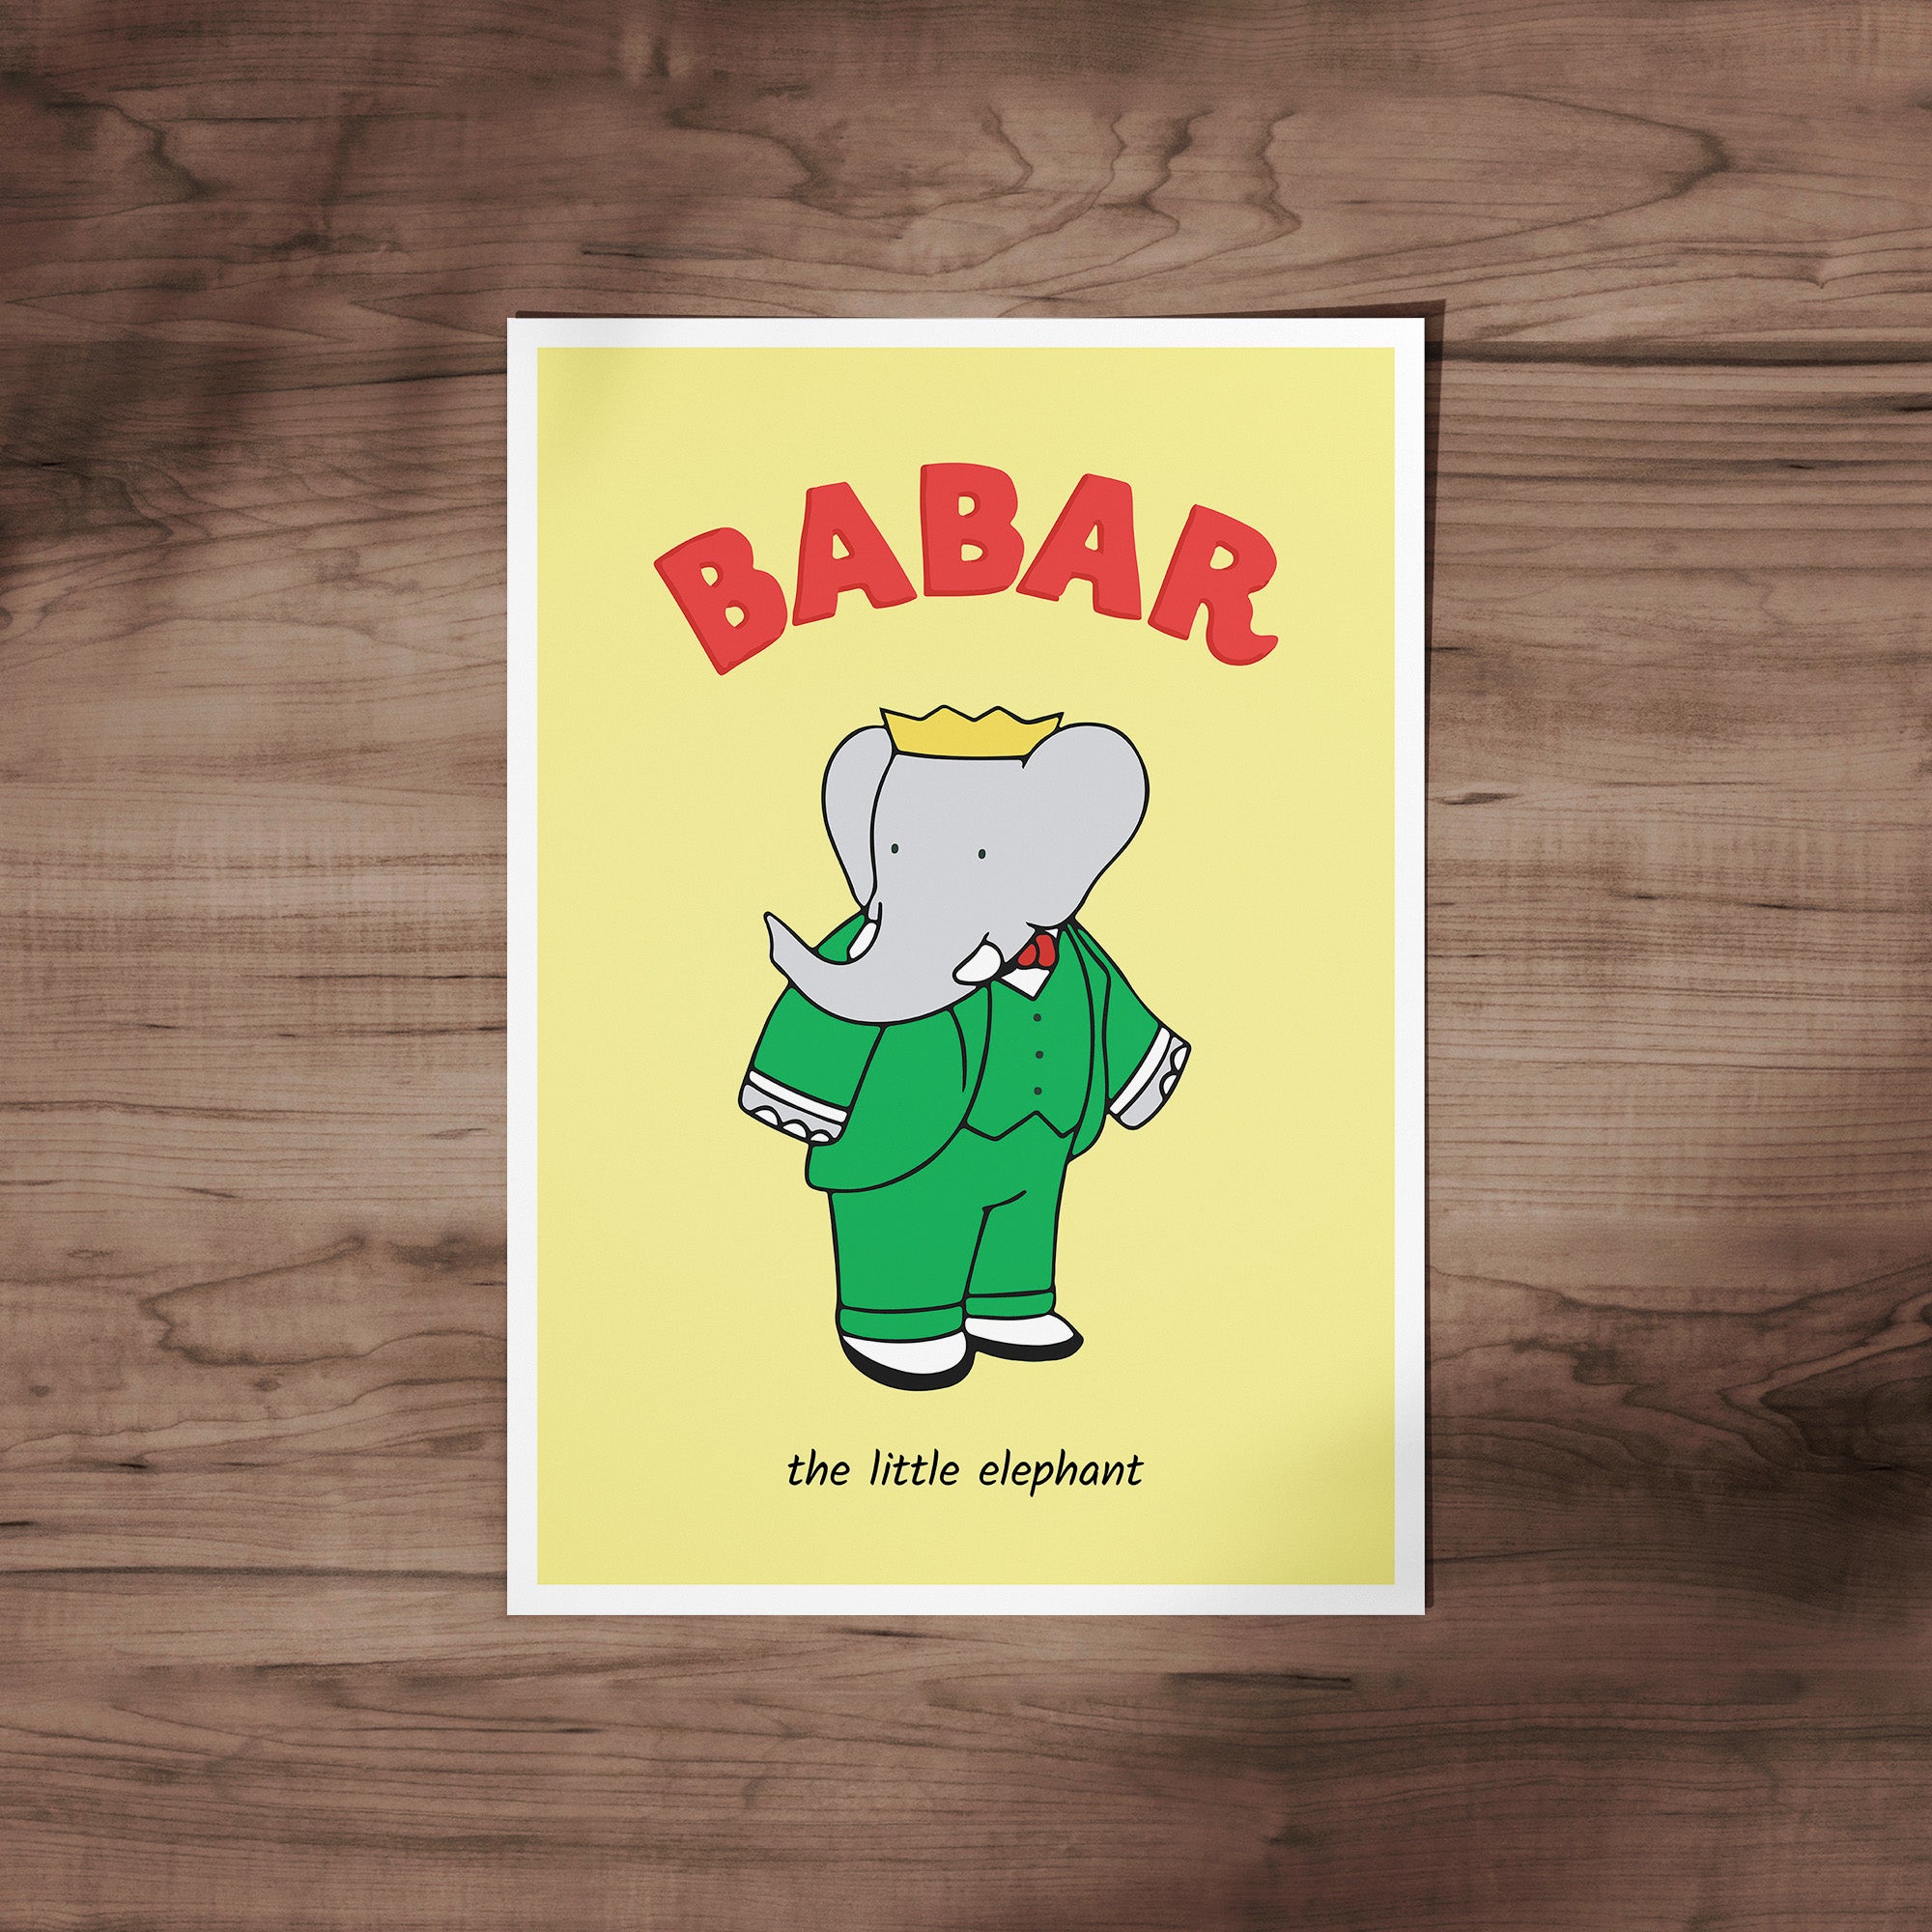 Babar The Little Elephant (Yellow)